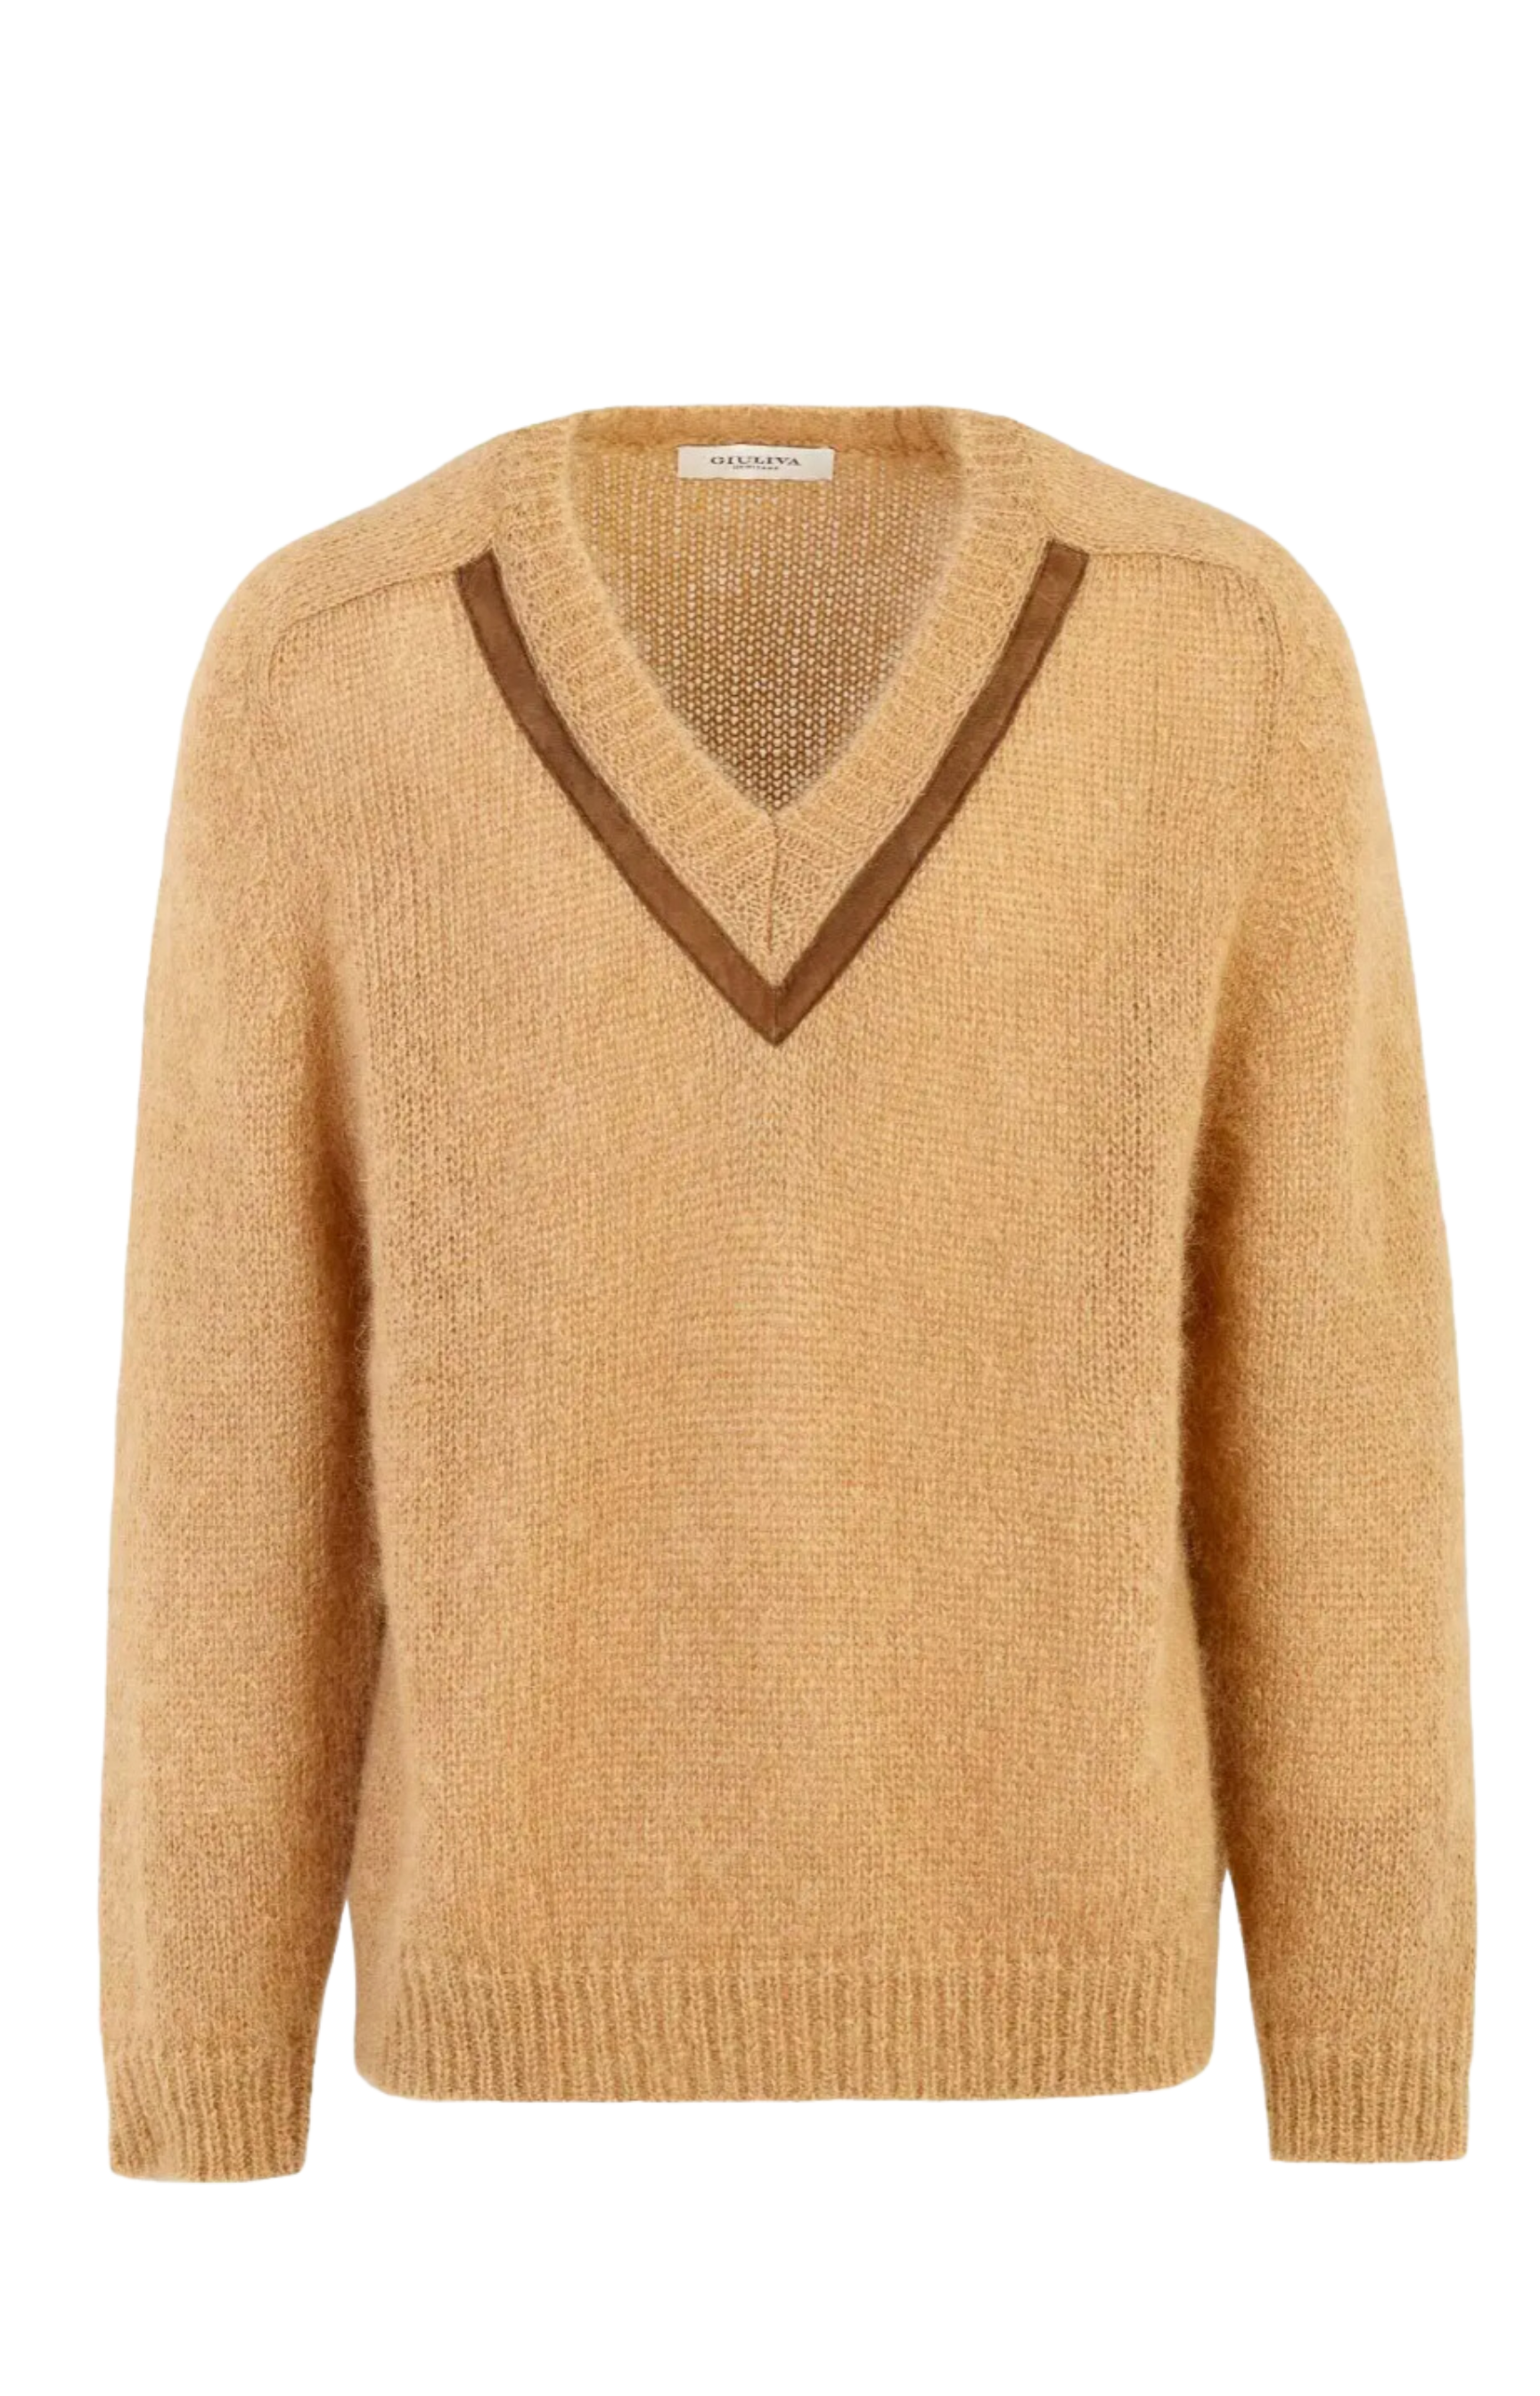 The Ambrogio Sweater